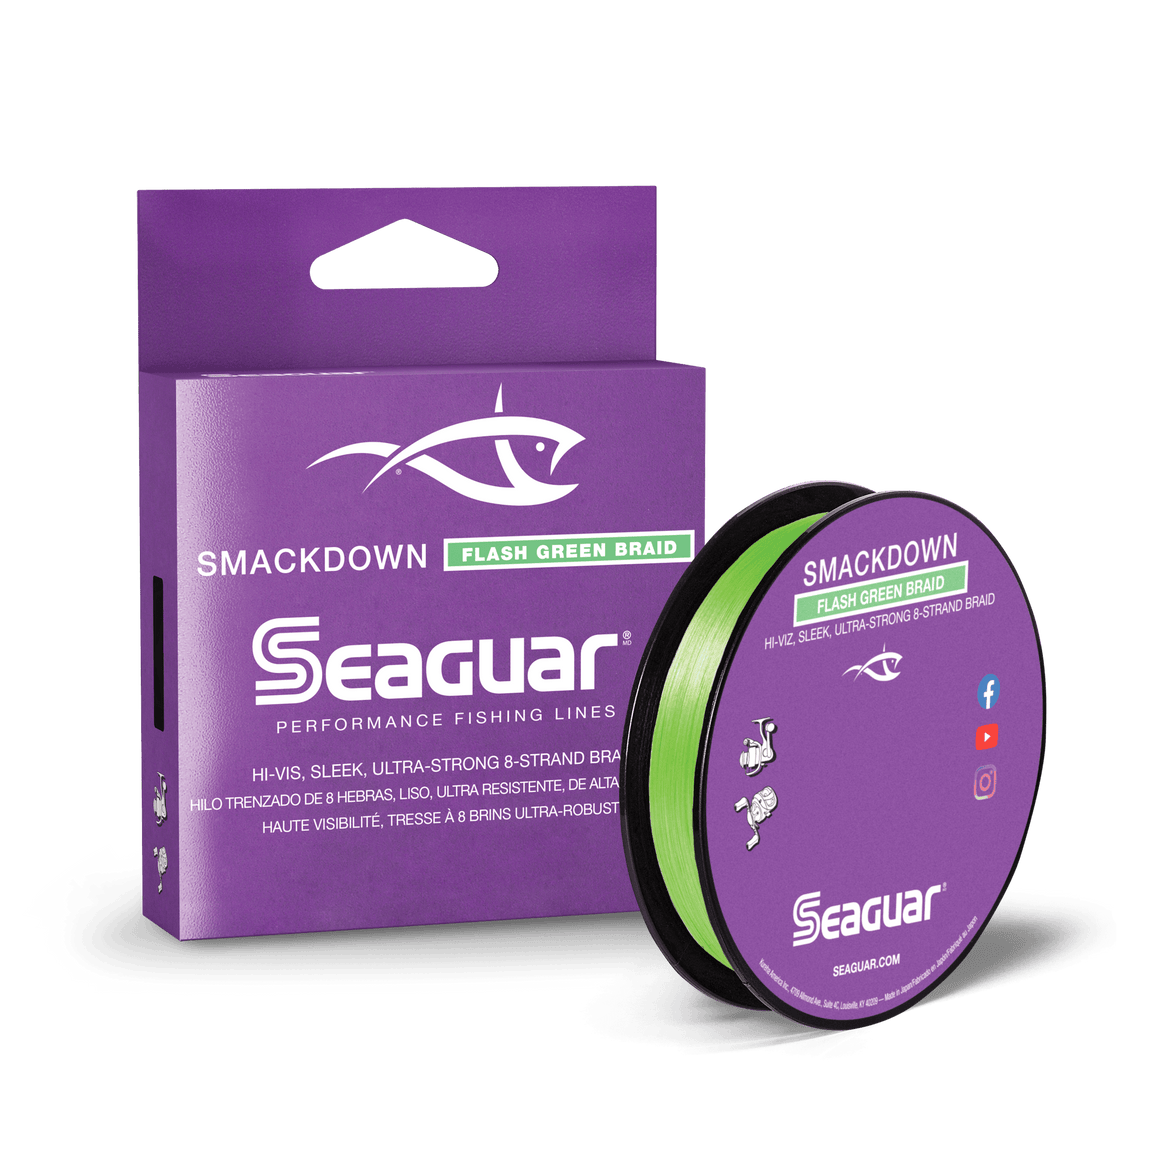 Seaguar Smackdown